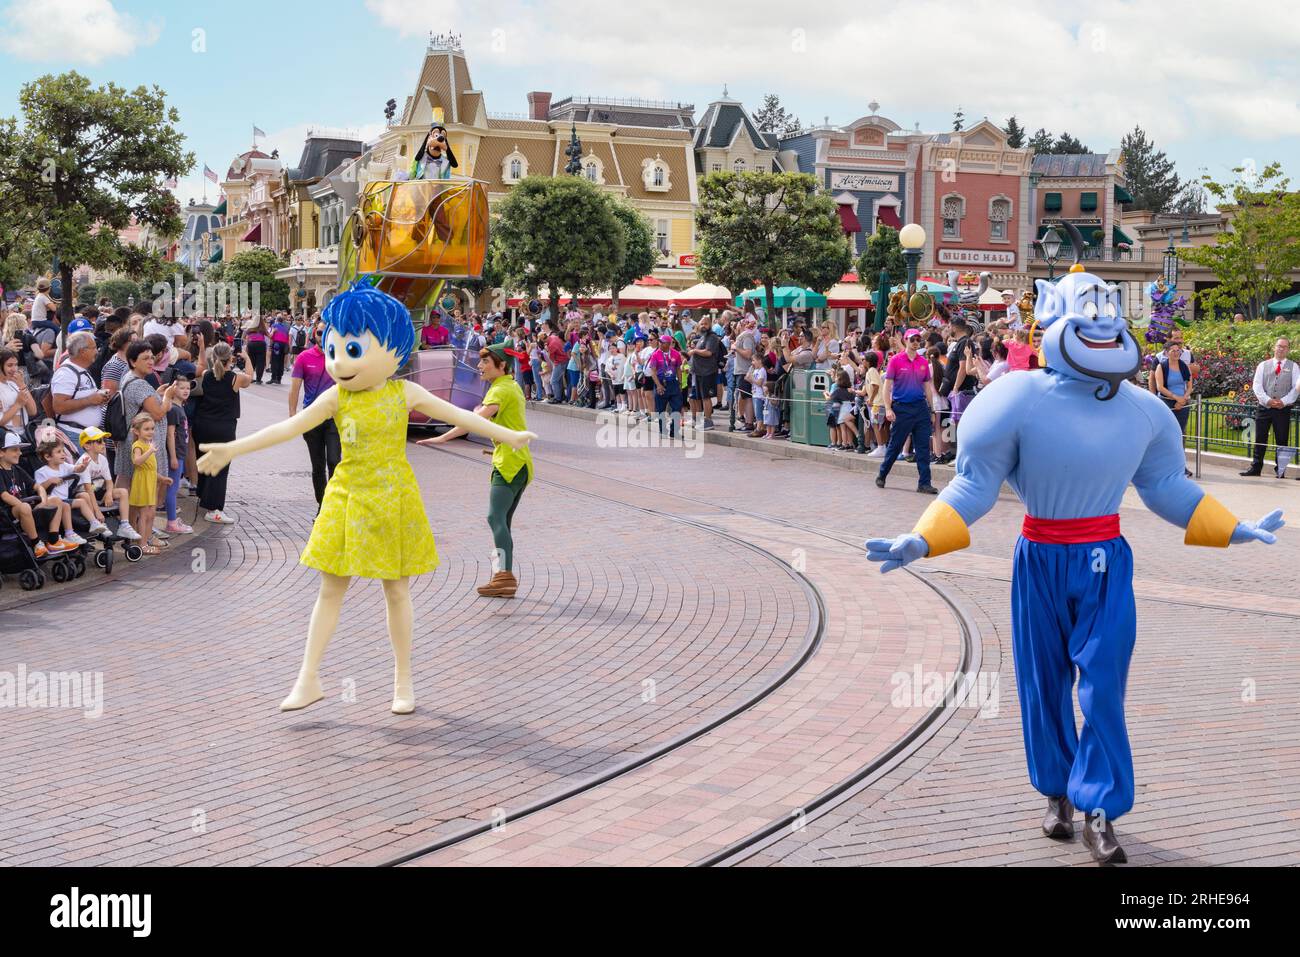 Disneyland Paris - la parata Disney con i personaggi disney Peter Pan, Joy e The Genie che ballano di fronte ai visitatori; Disneyland Paris, Francia Foto Stock